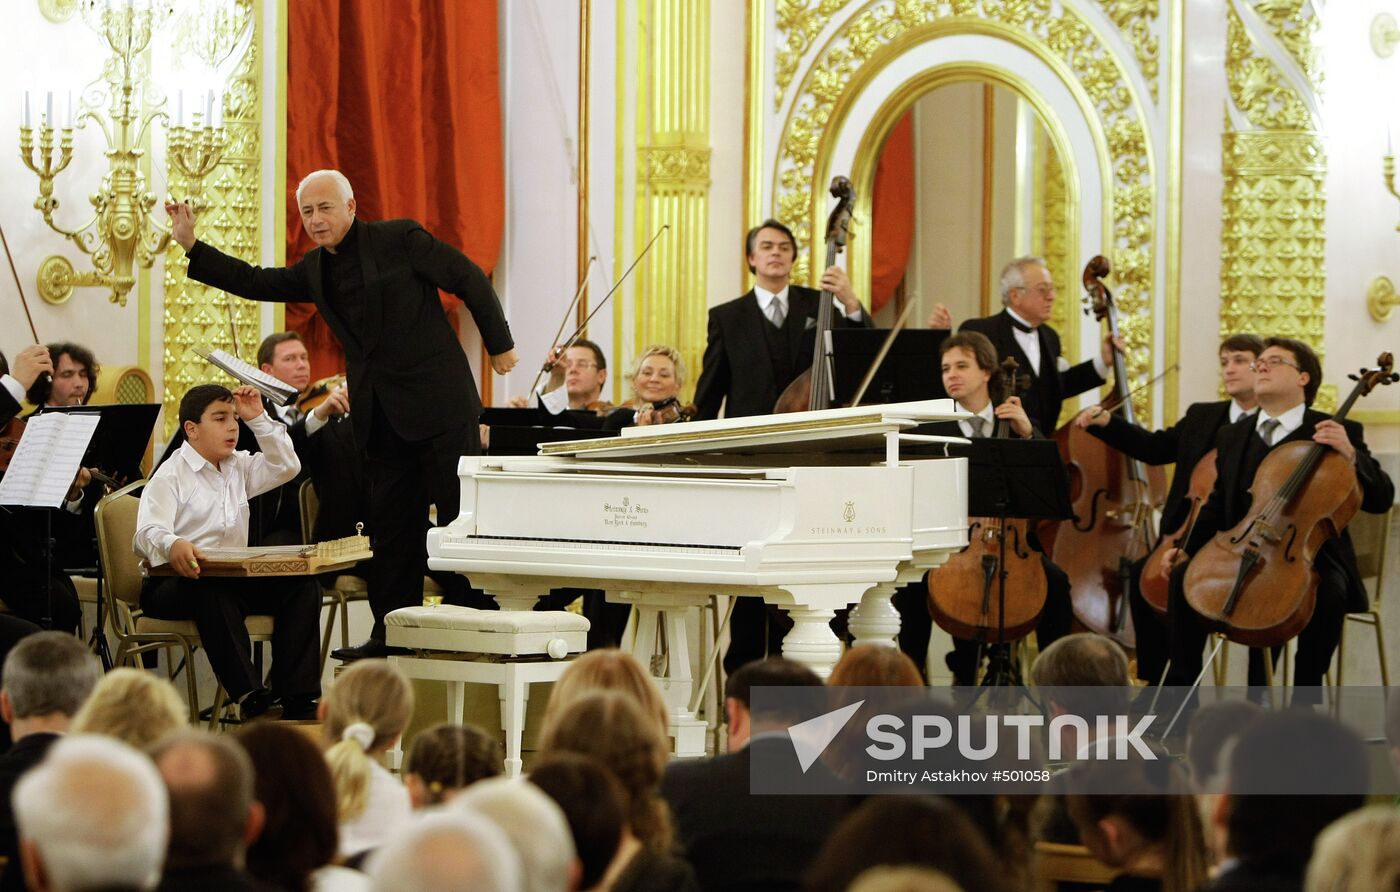 Vladimir Spivakov takes part in Rising Stars At The Kremlin